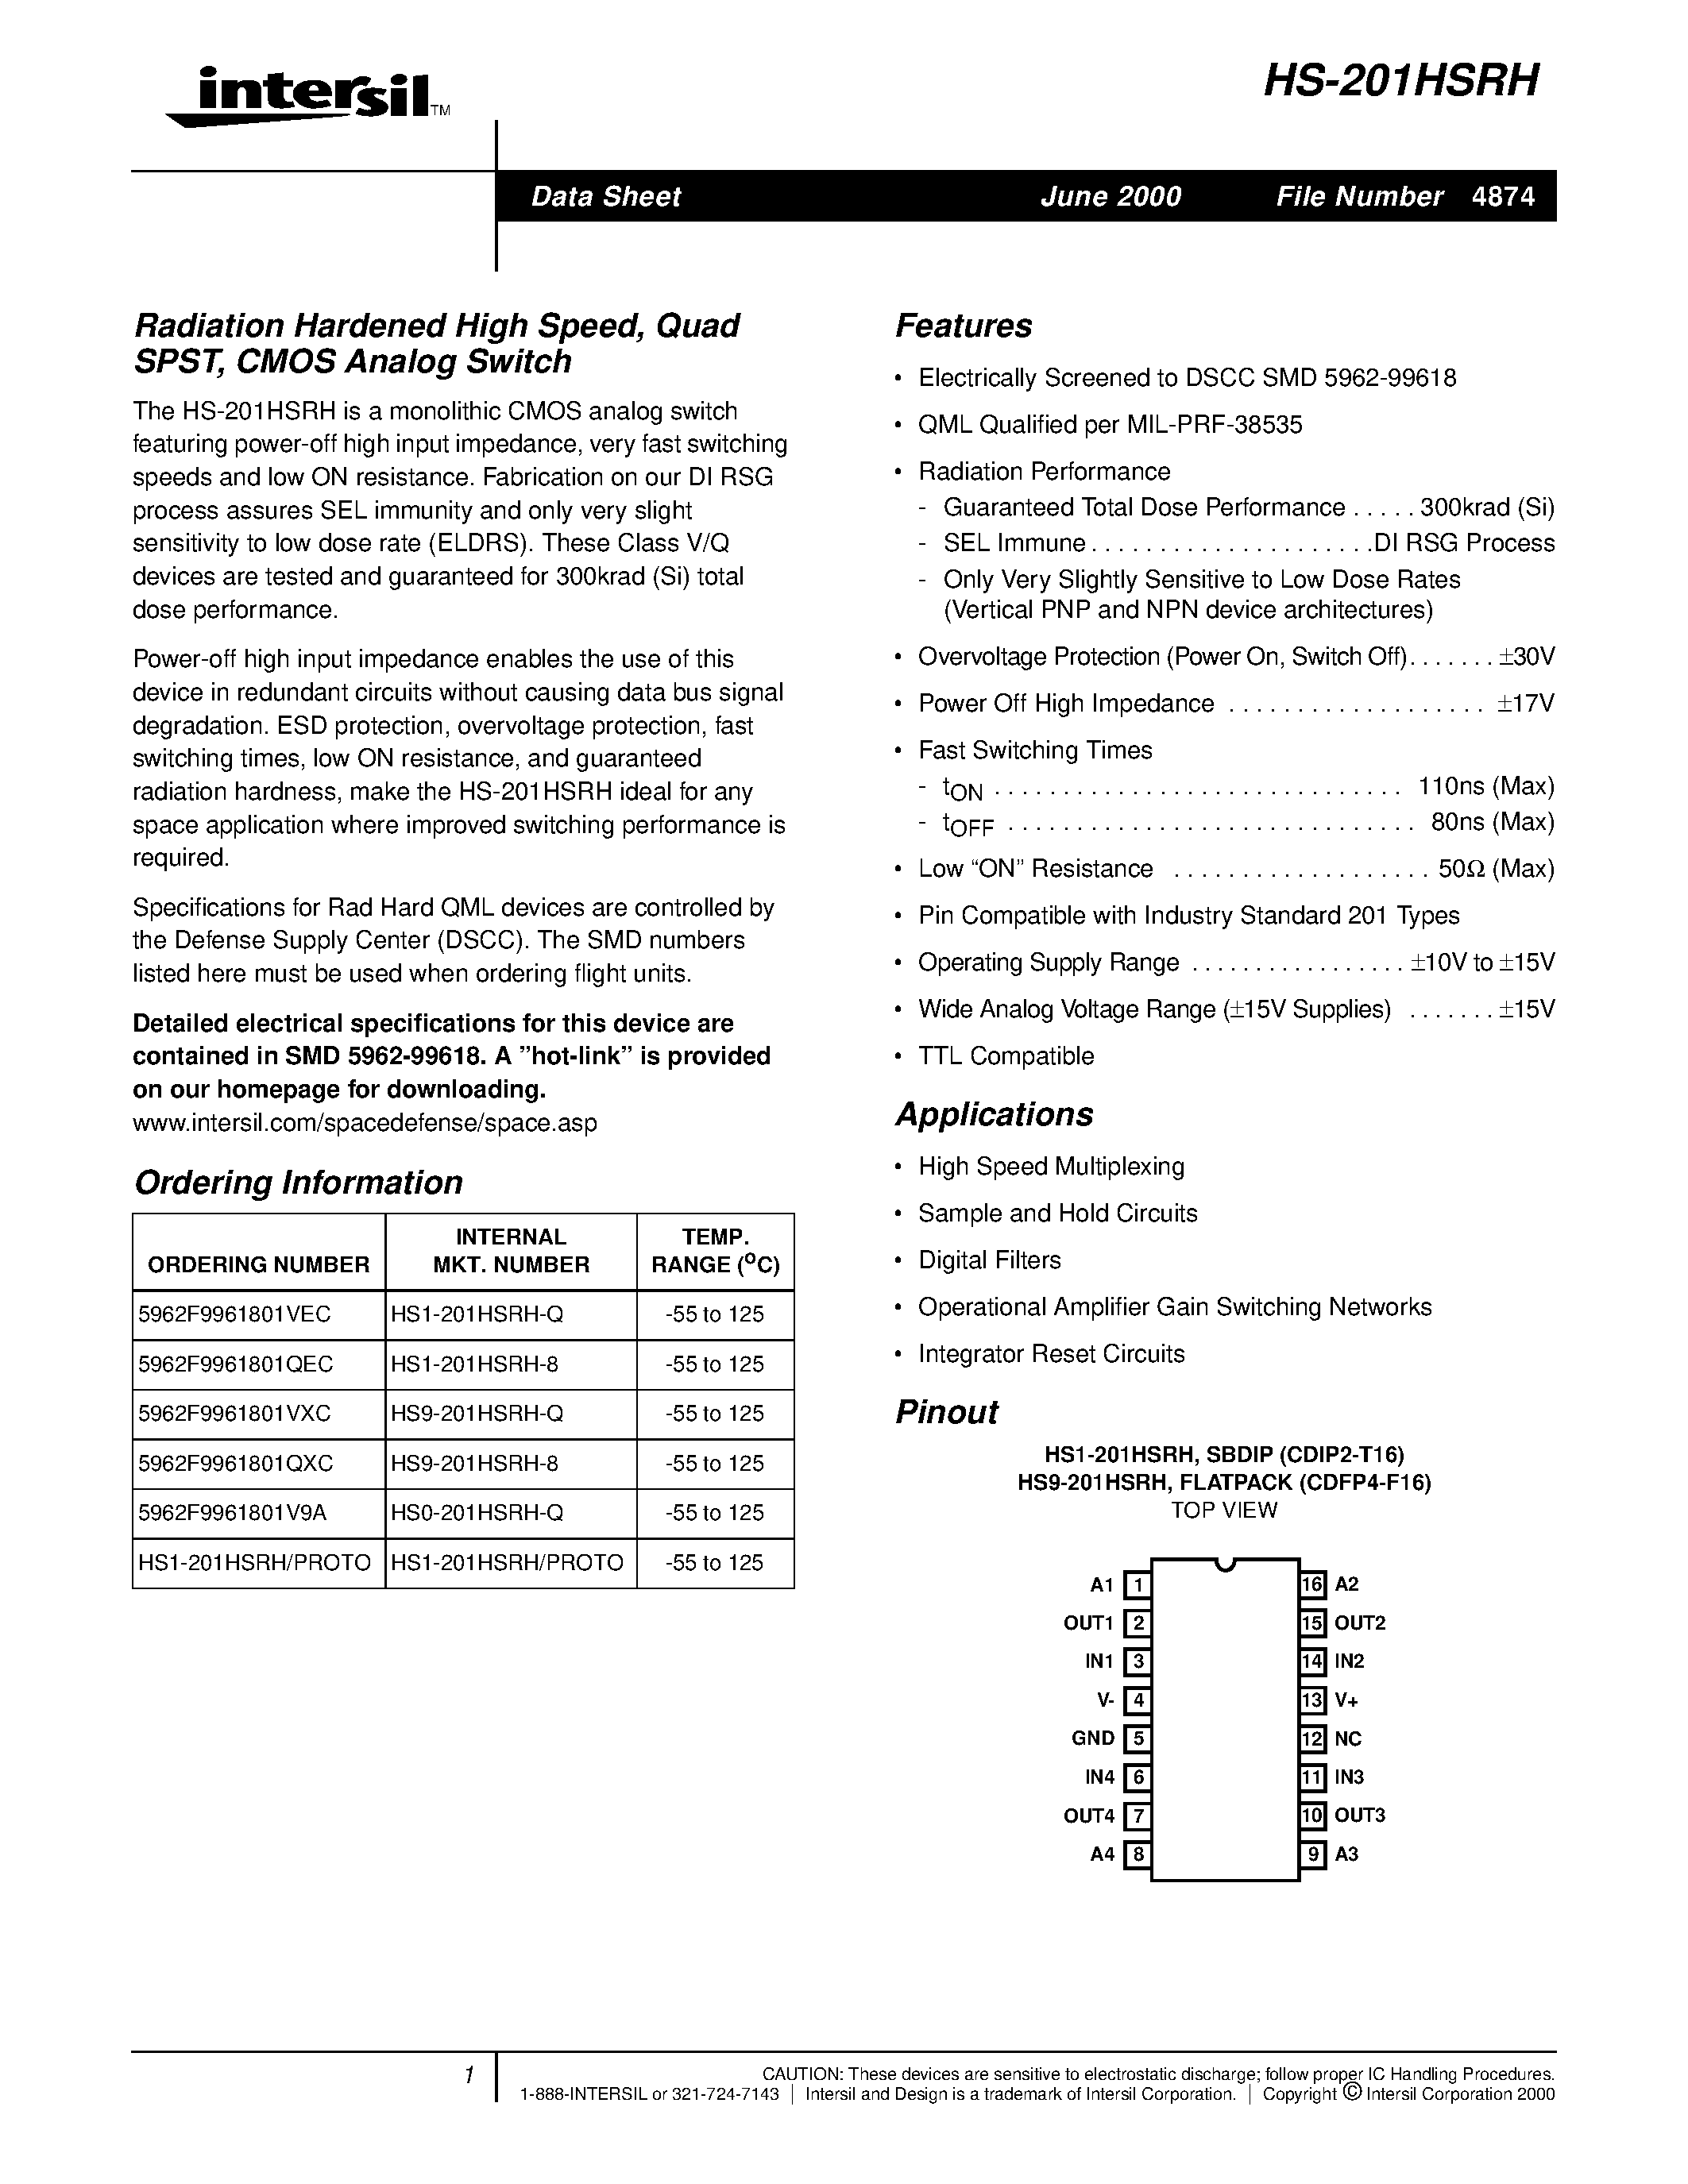 Даташит HS1-201HSRH-Q-Radiation Hardened High Speed/ Quad SPST/ CMOS Analog Switch страница 1